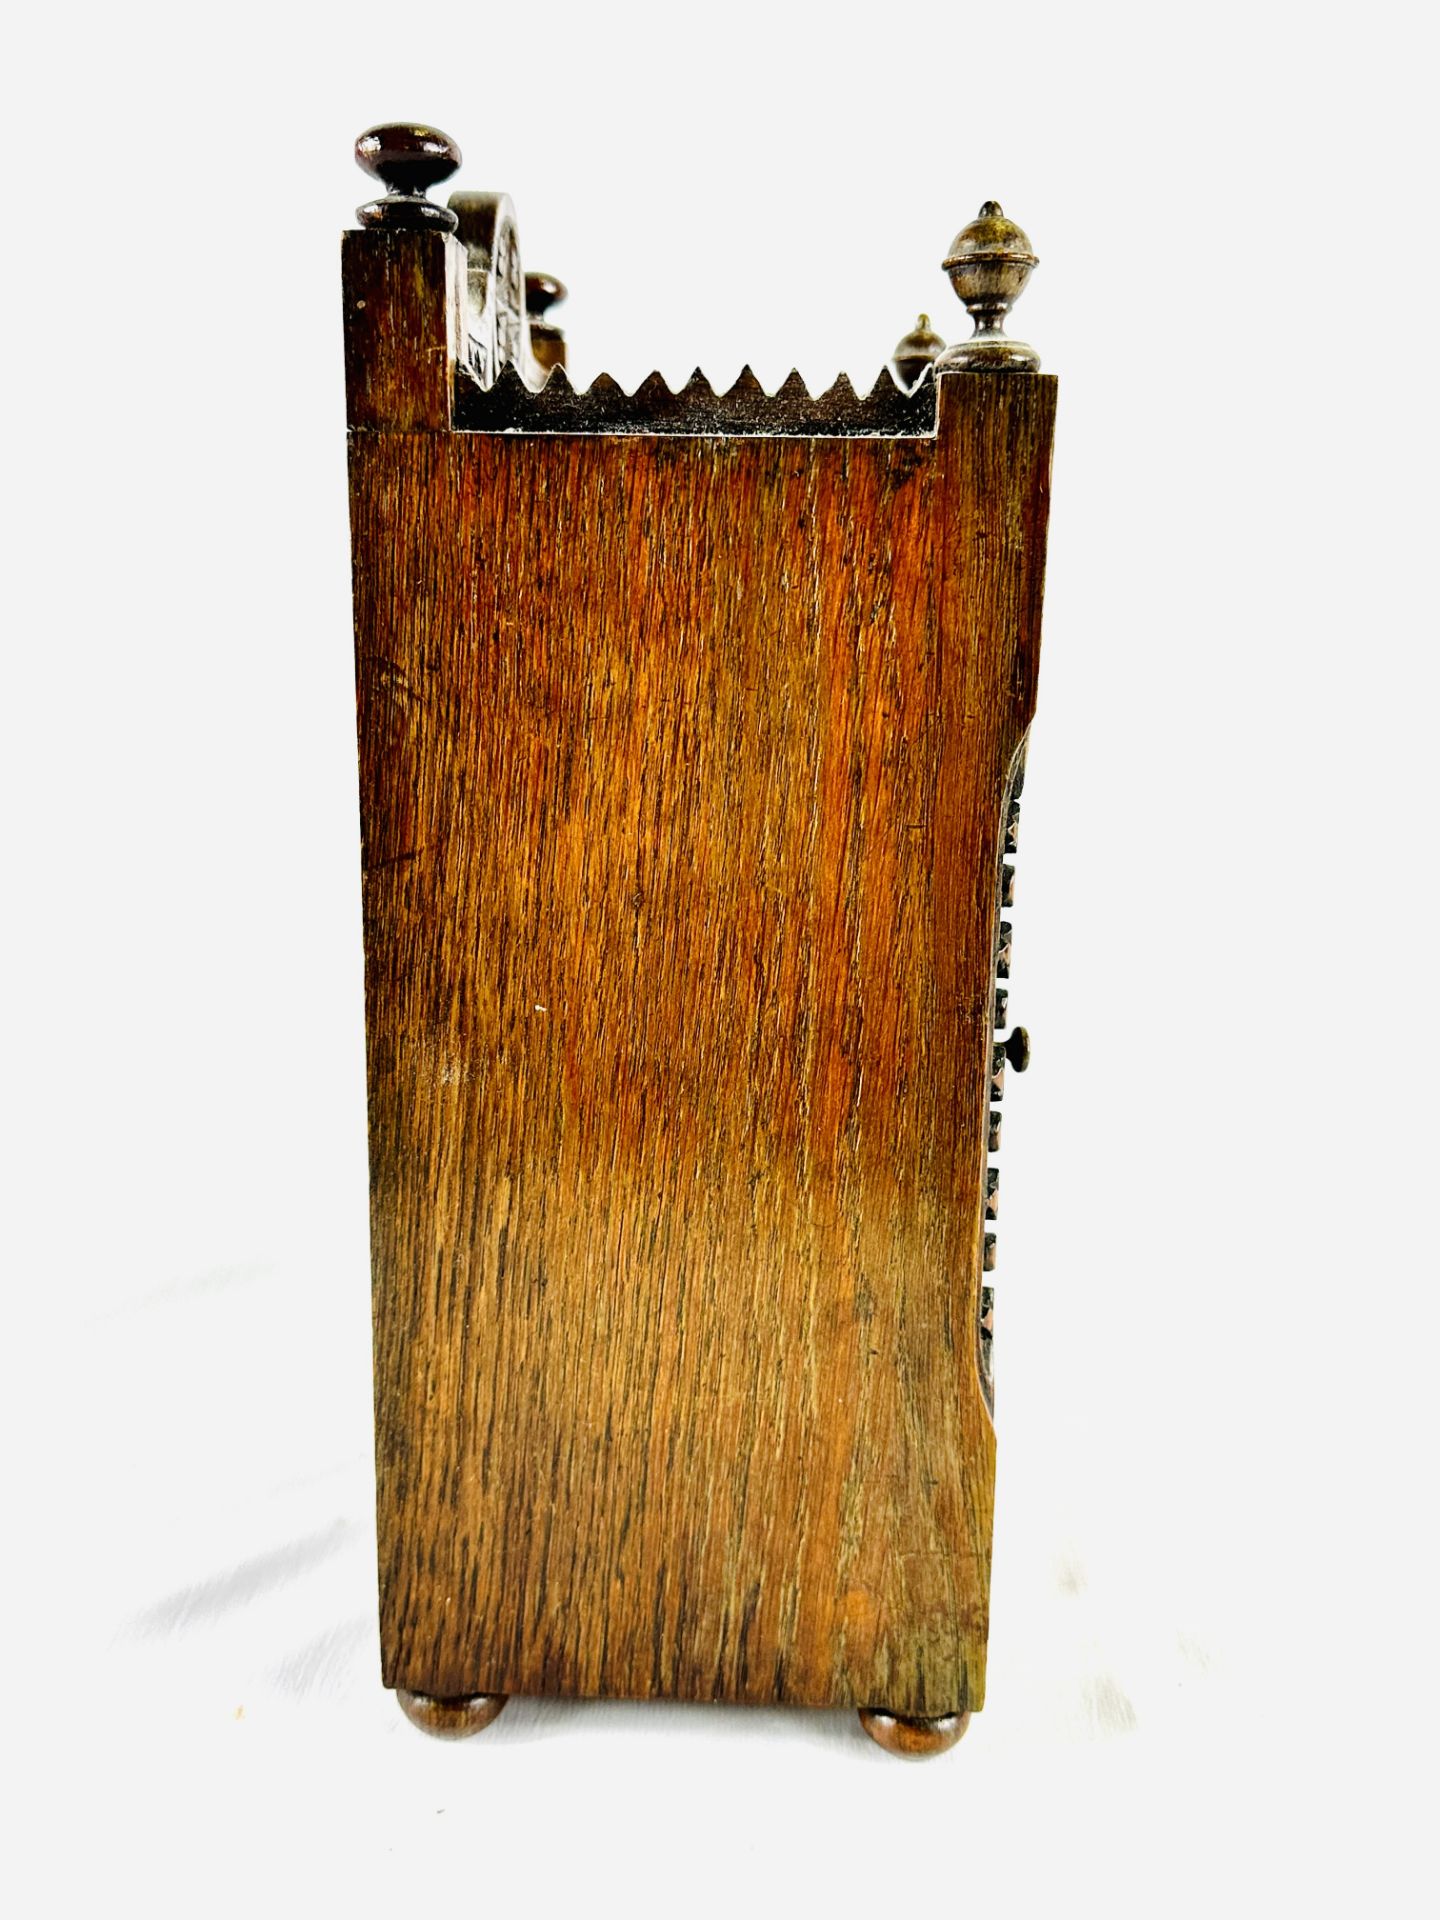 Early 20th century oak cased mantel clock - Image 6 of 6